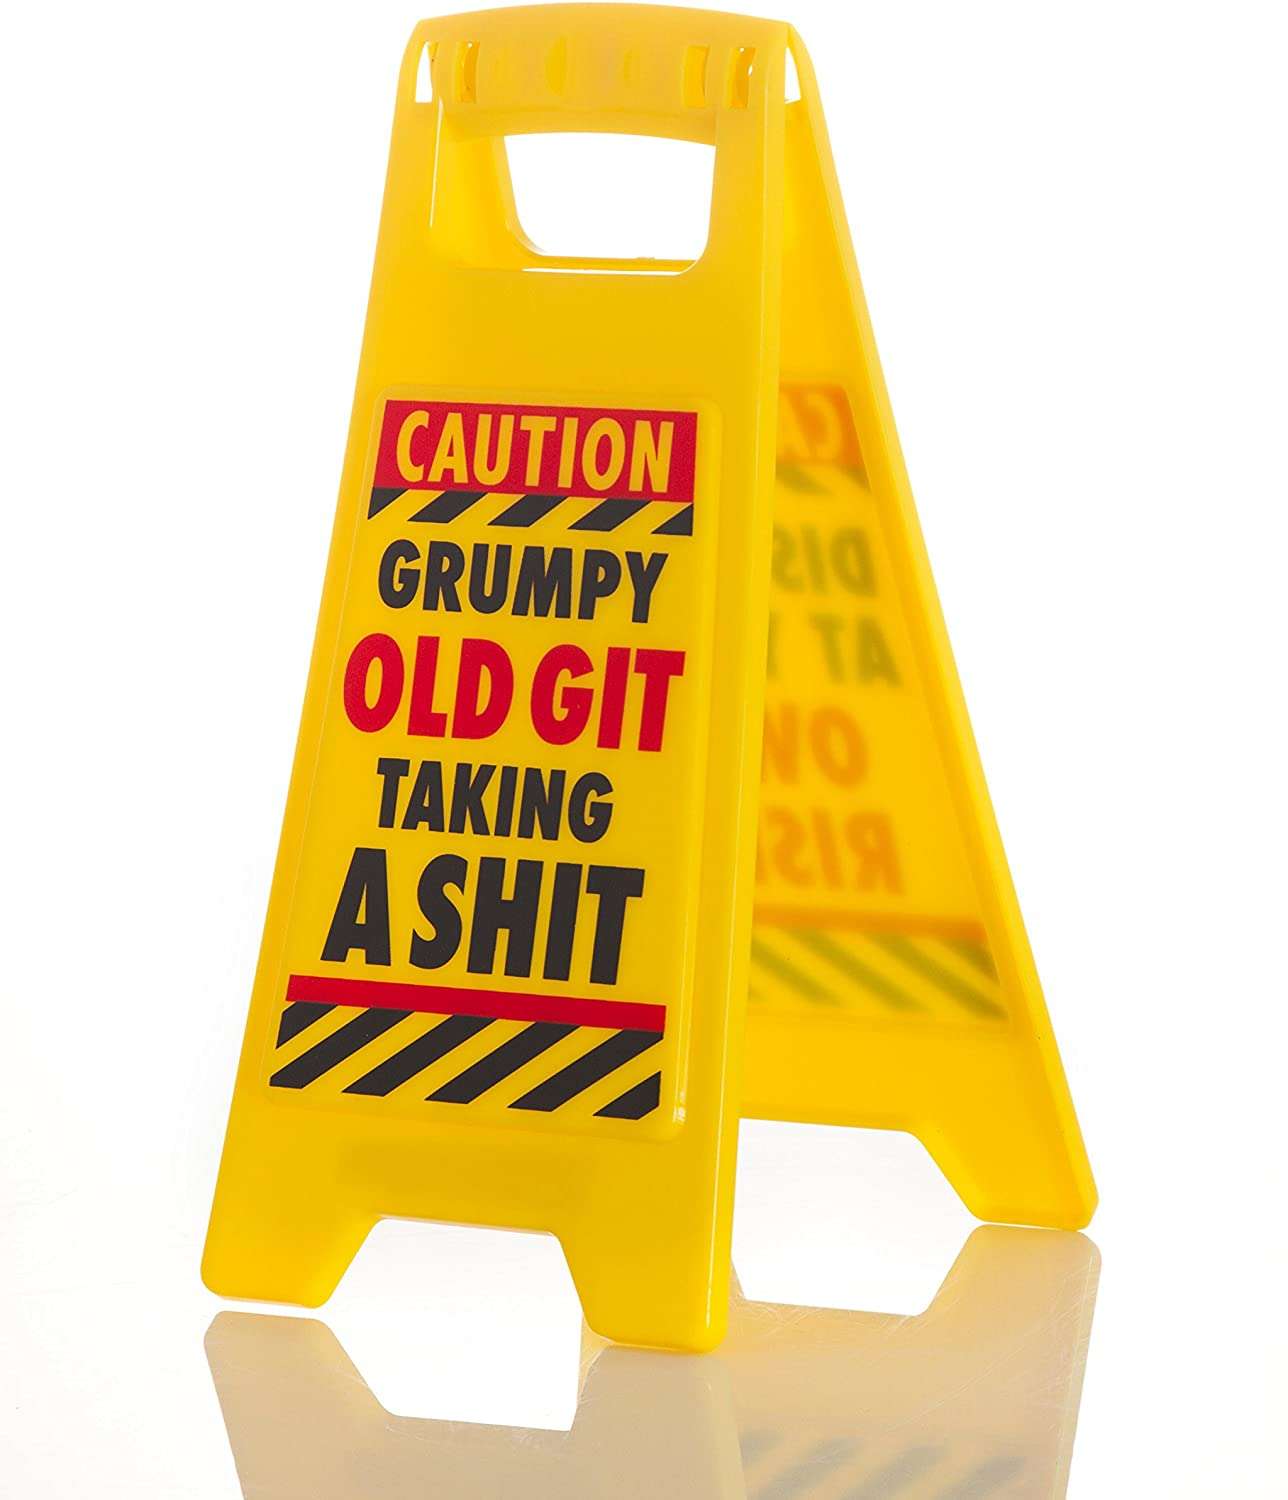 Grumpy Old Gift Warning Sign